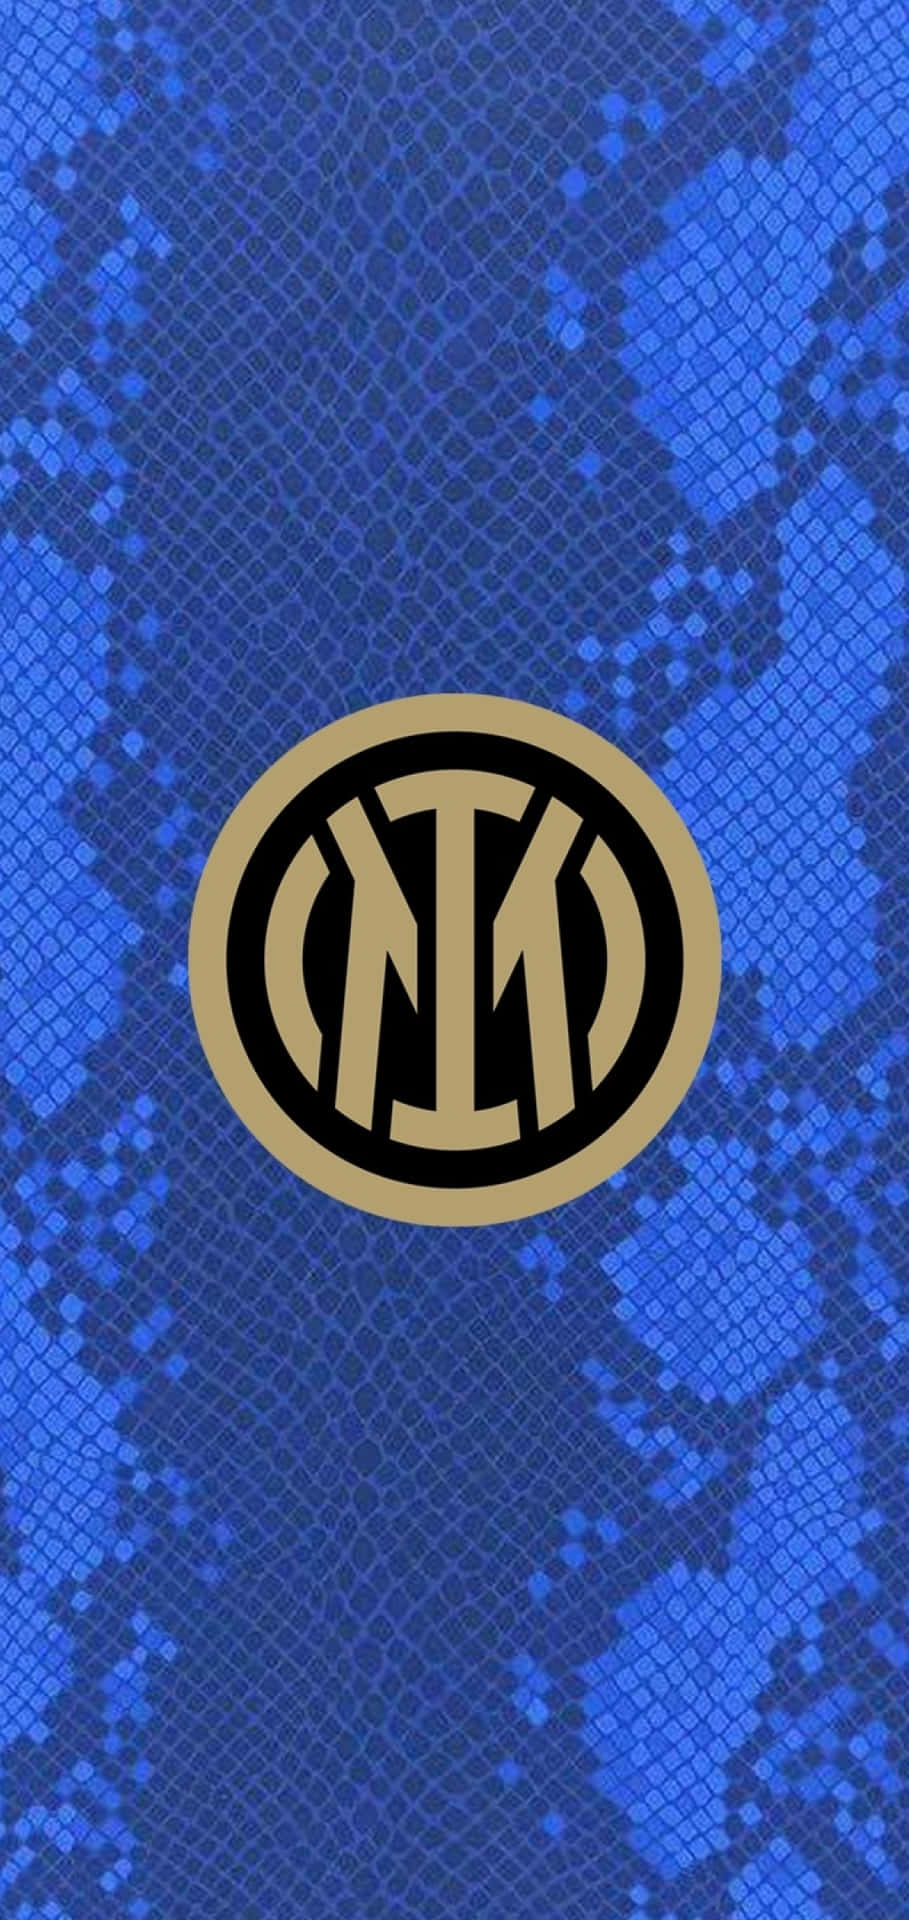 Intermediate Protrait Logo Inter Milan Wallpaper